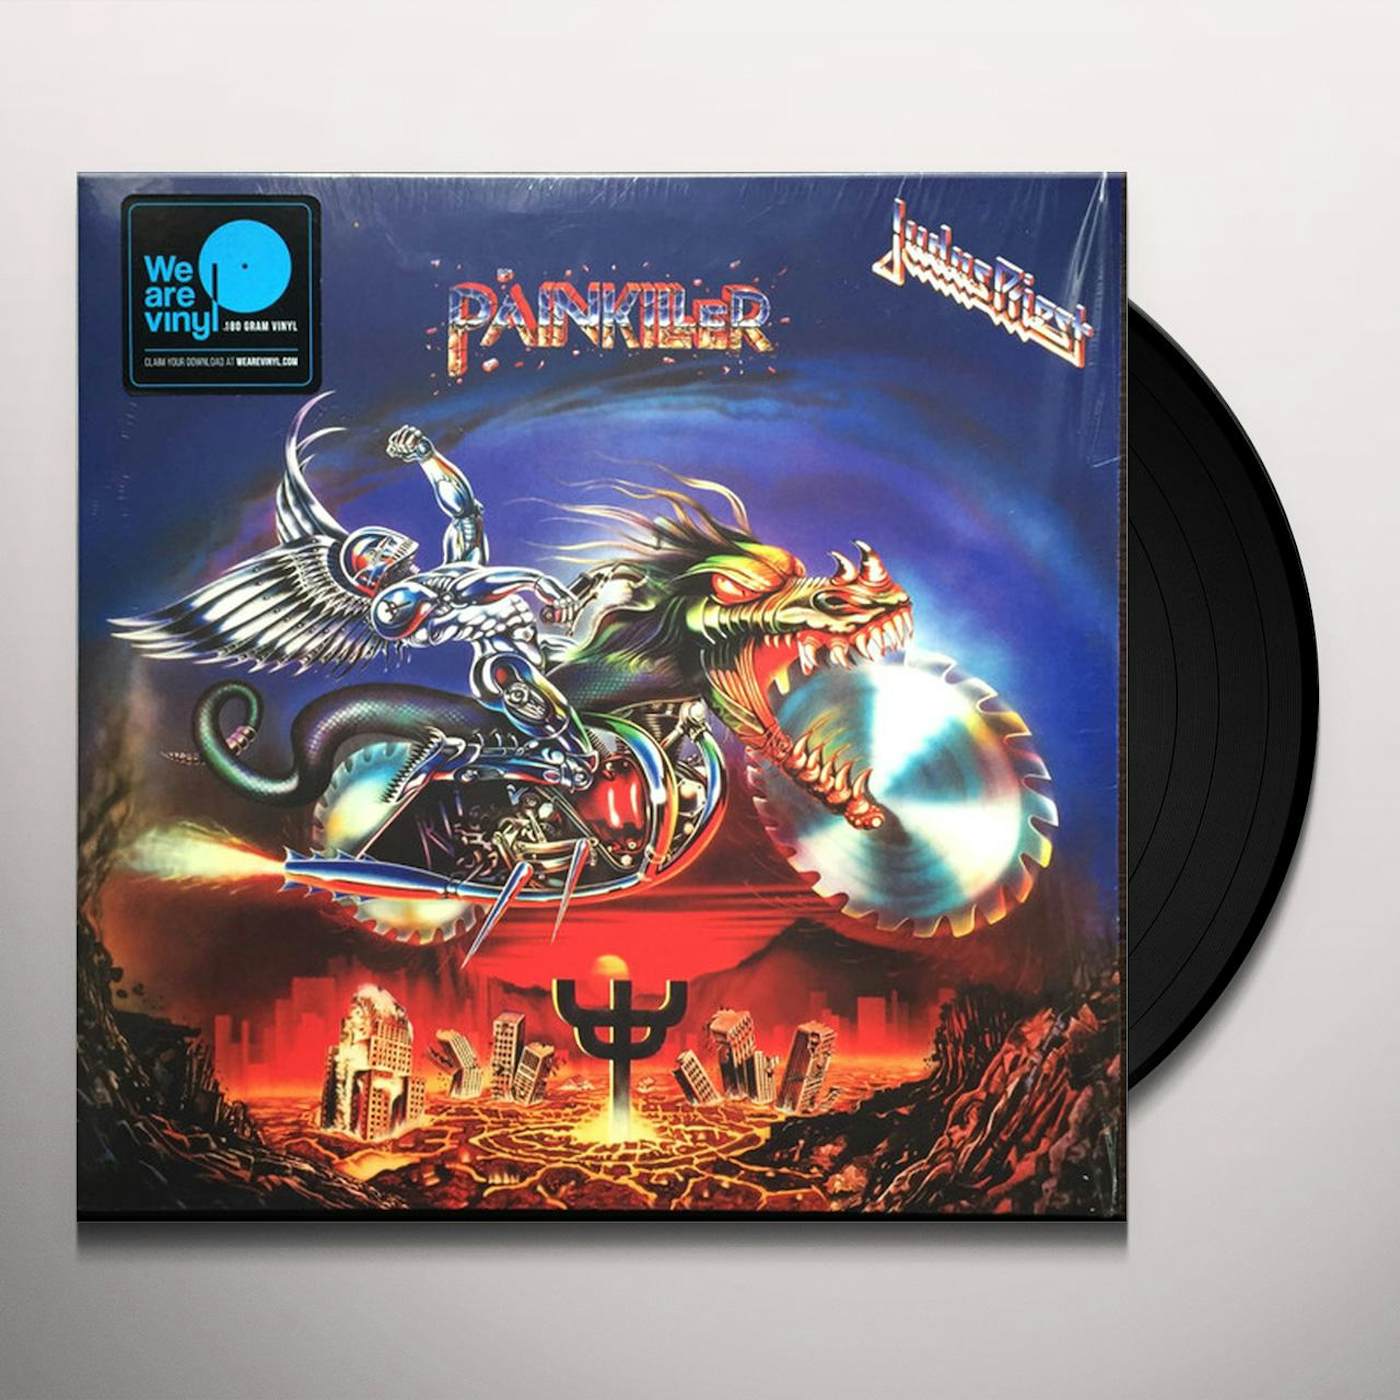 Judas Priest-Sad Wings Of Destiny Exclusive LP Color Vinyl